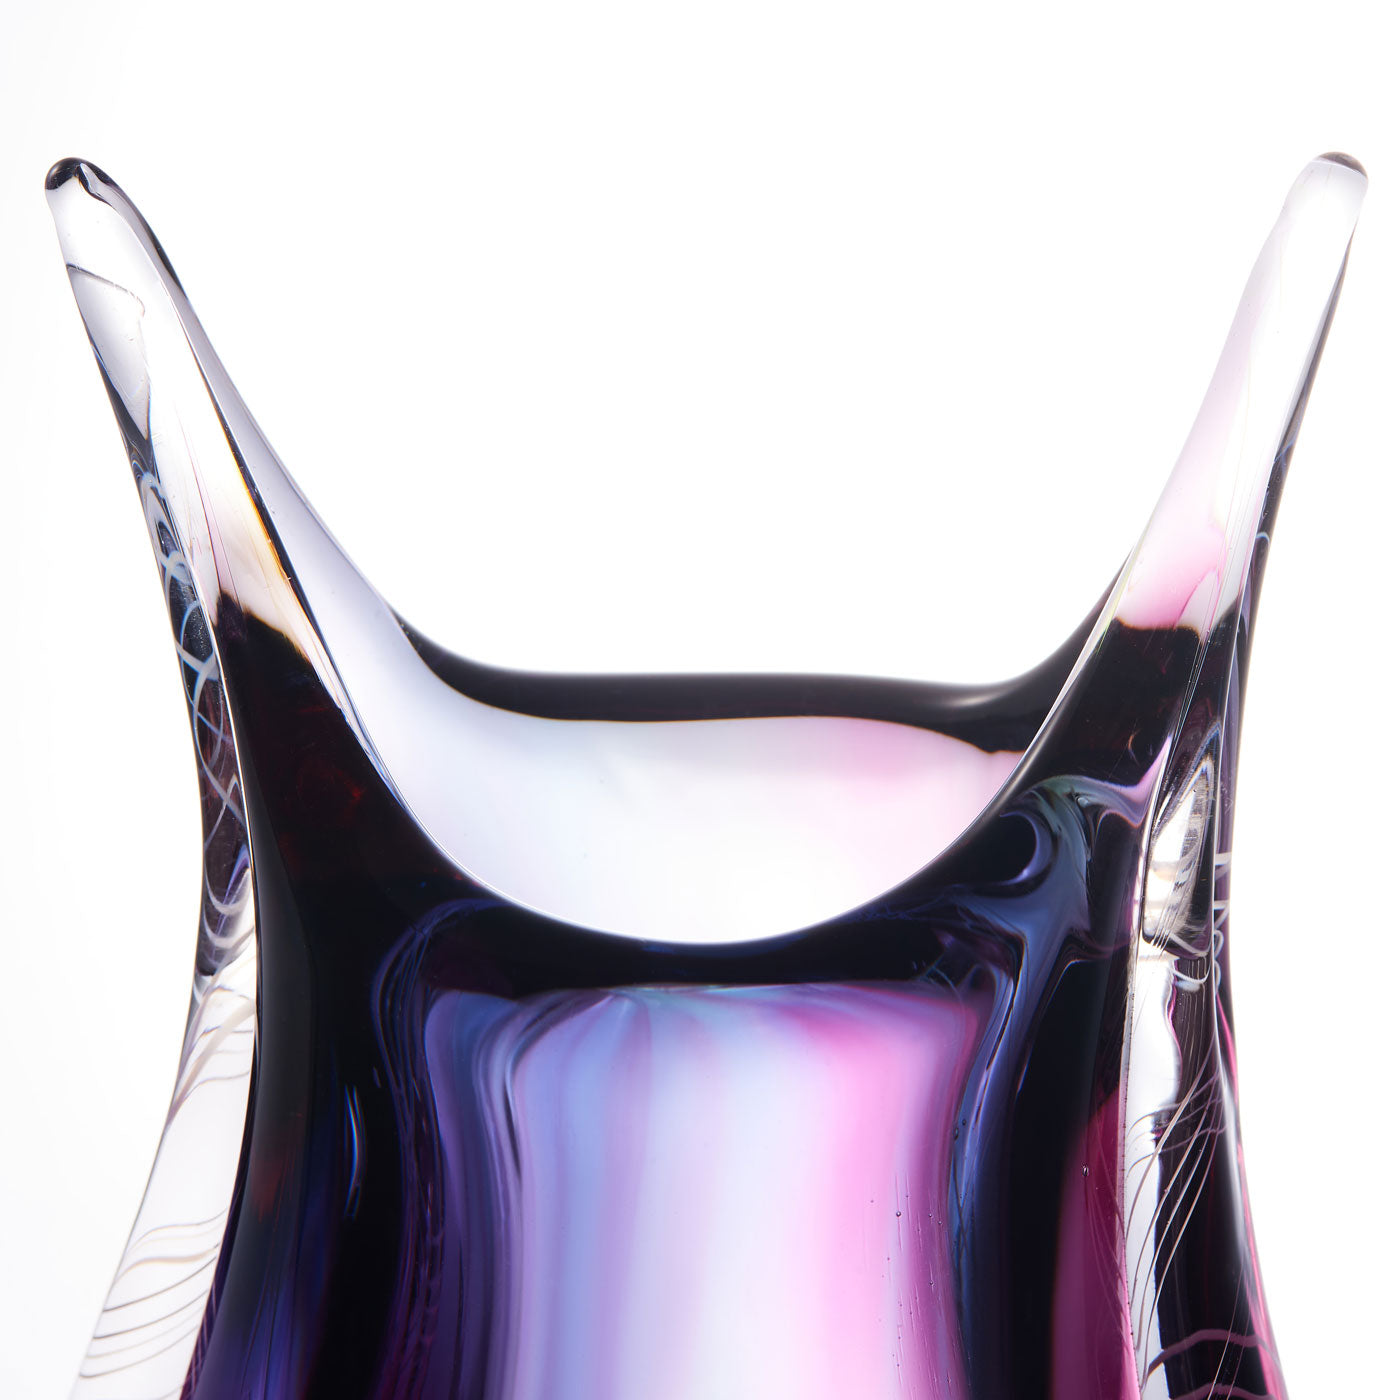 Hand Blown Sommerso Art Glass Teardrop Vase 8-10.5 inch tall